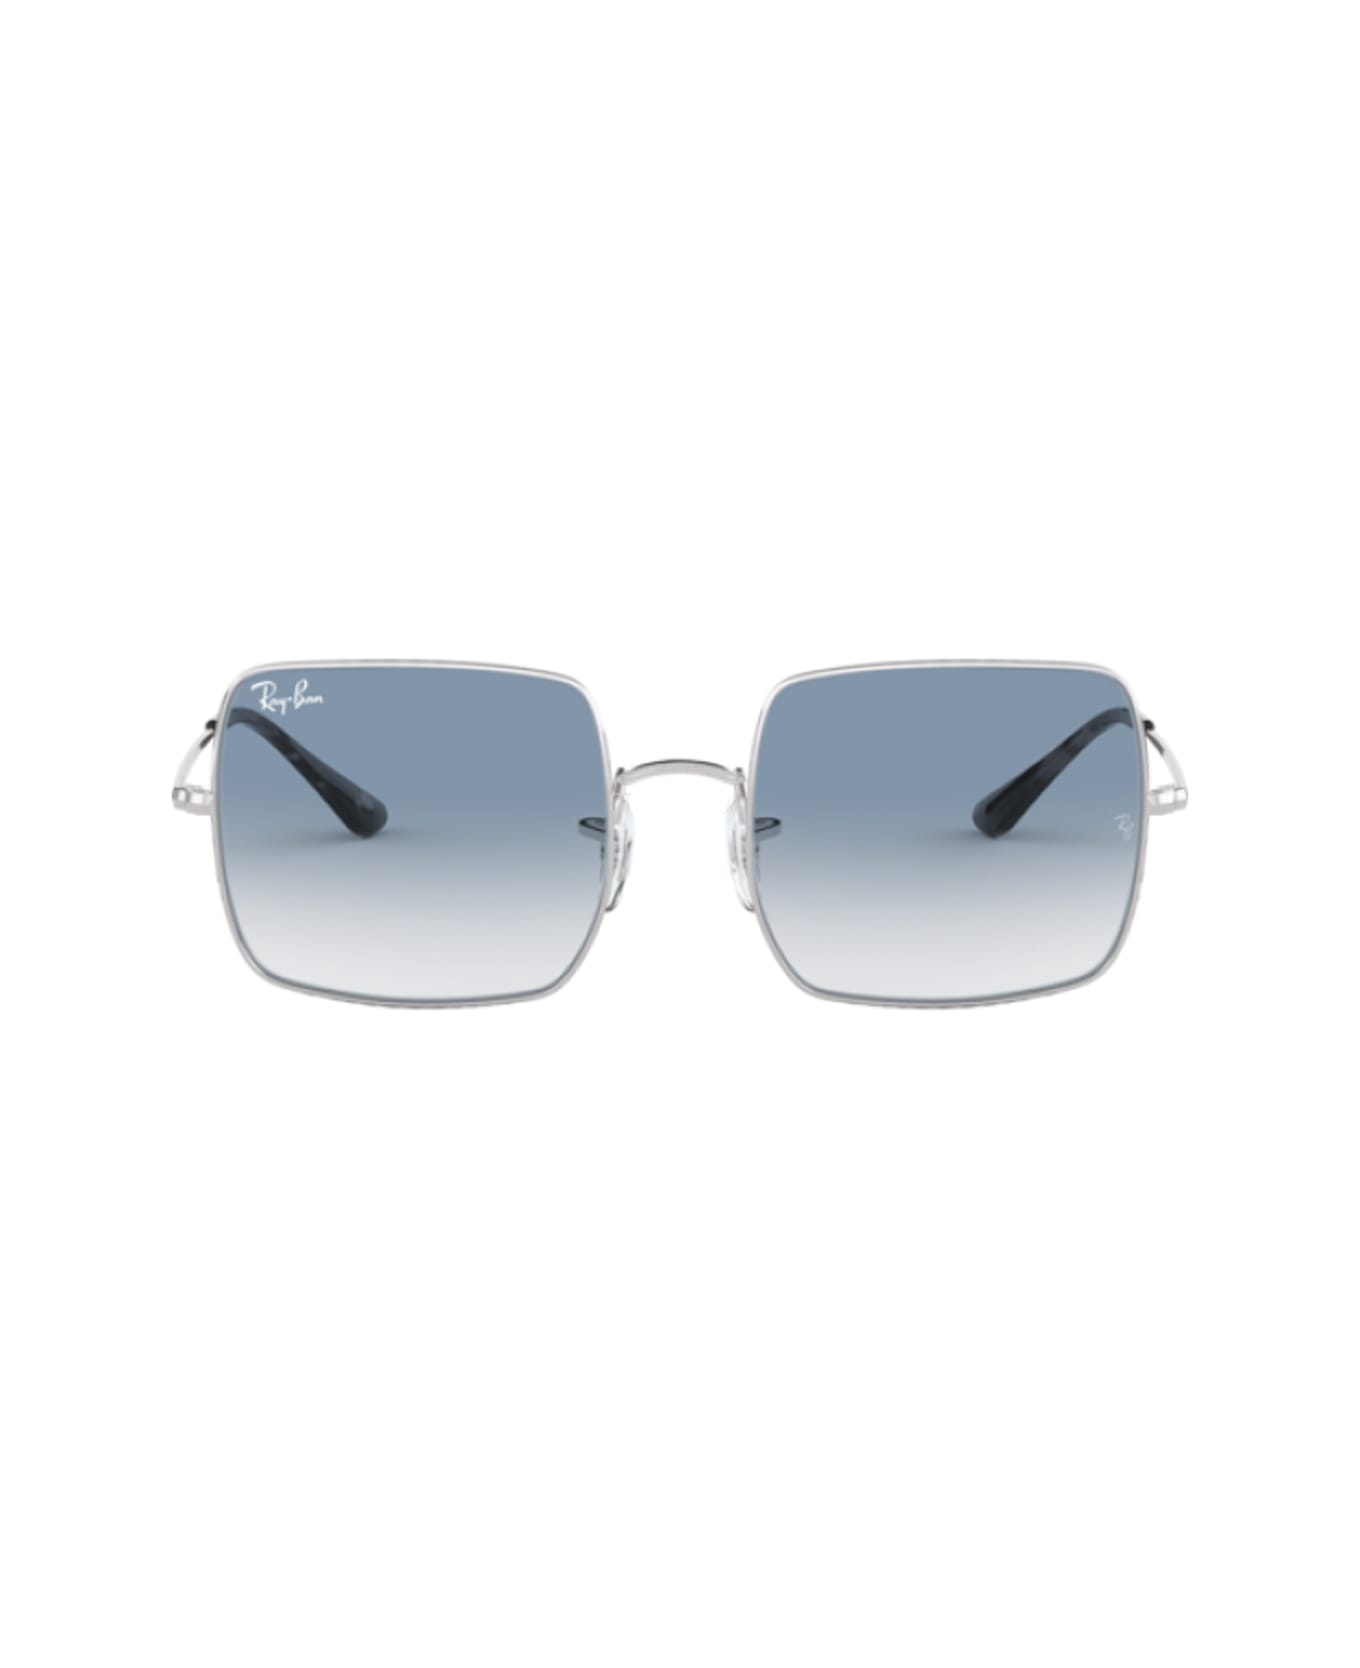 Ray-Ban Square Rb1971 91493f Sunglasses - Argento サングラス